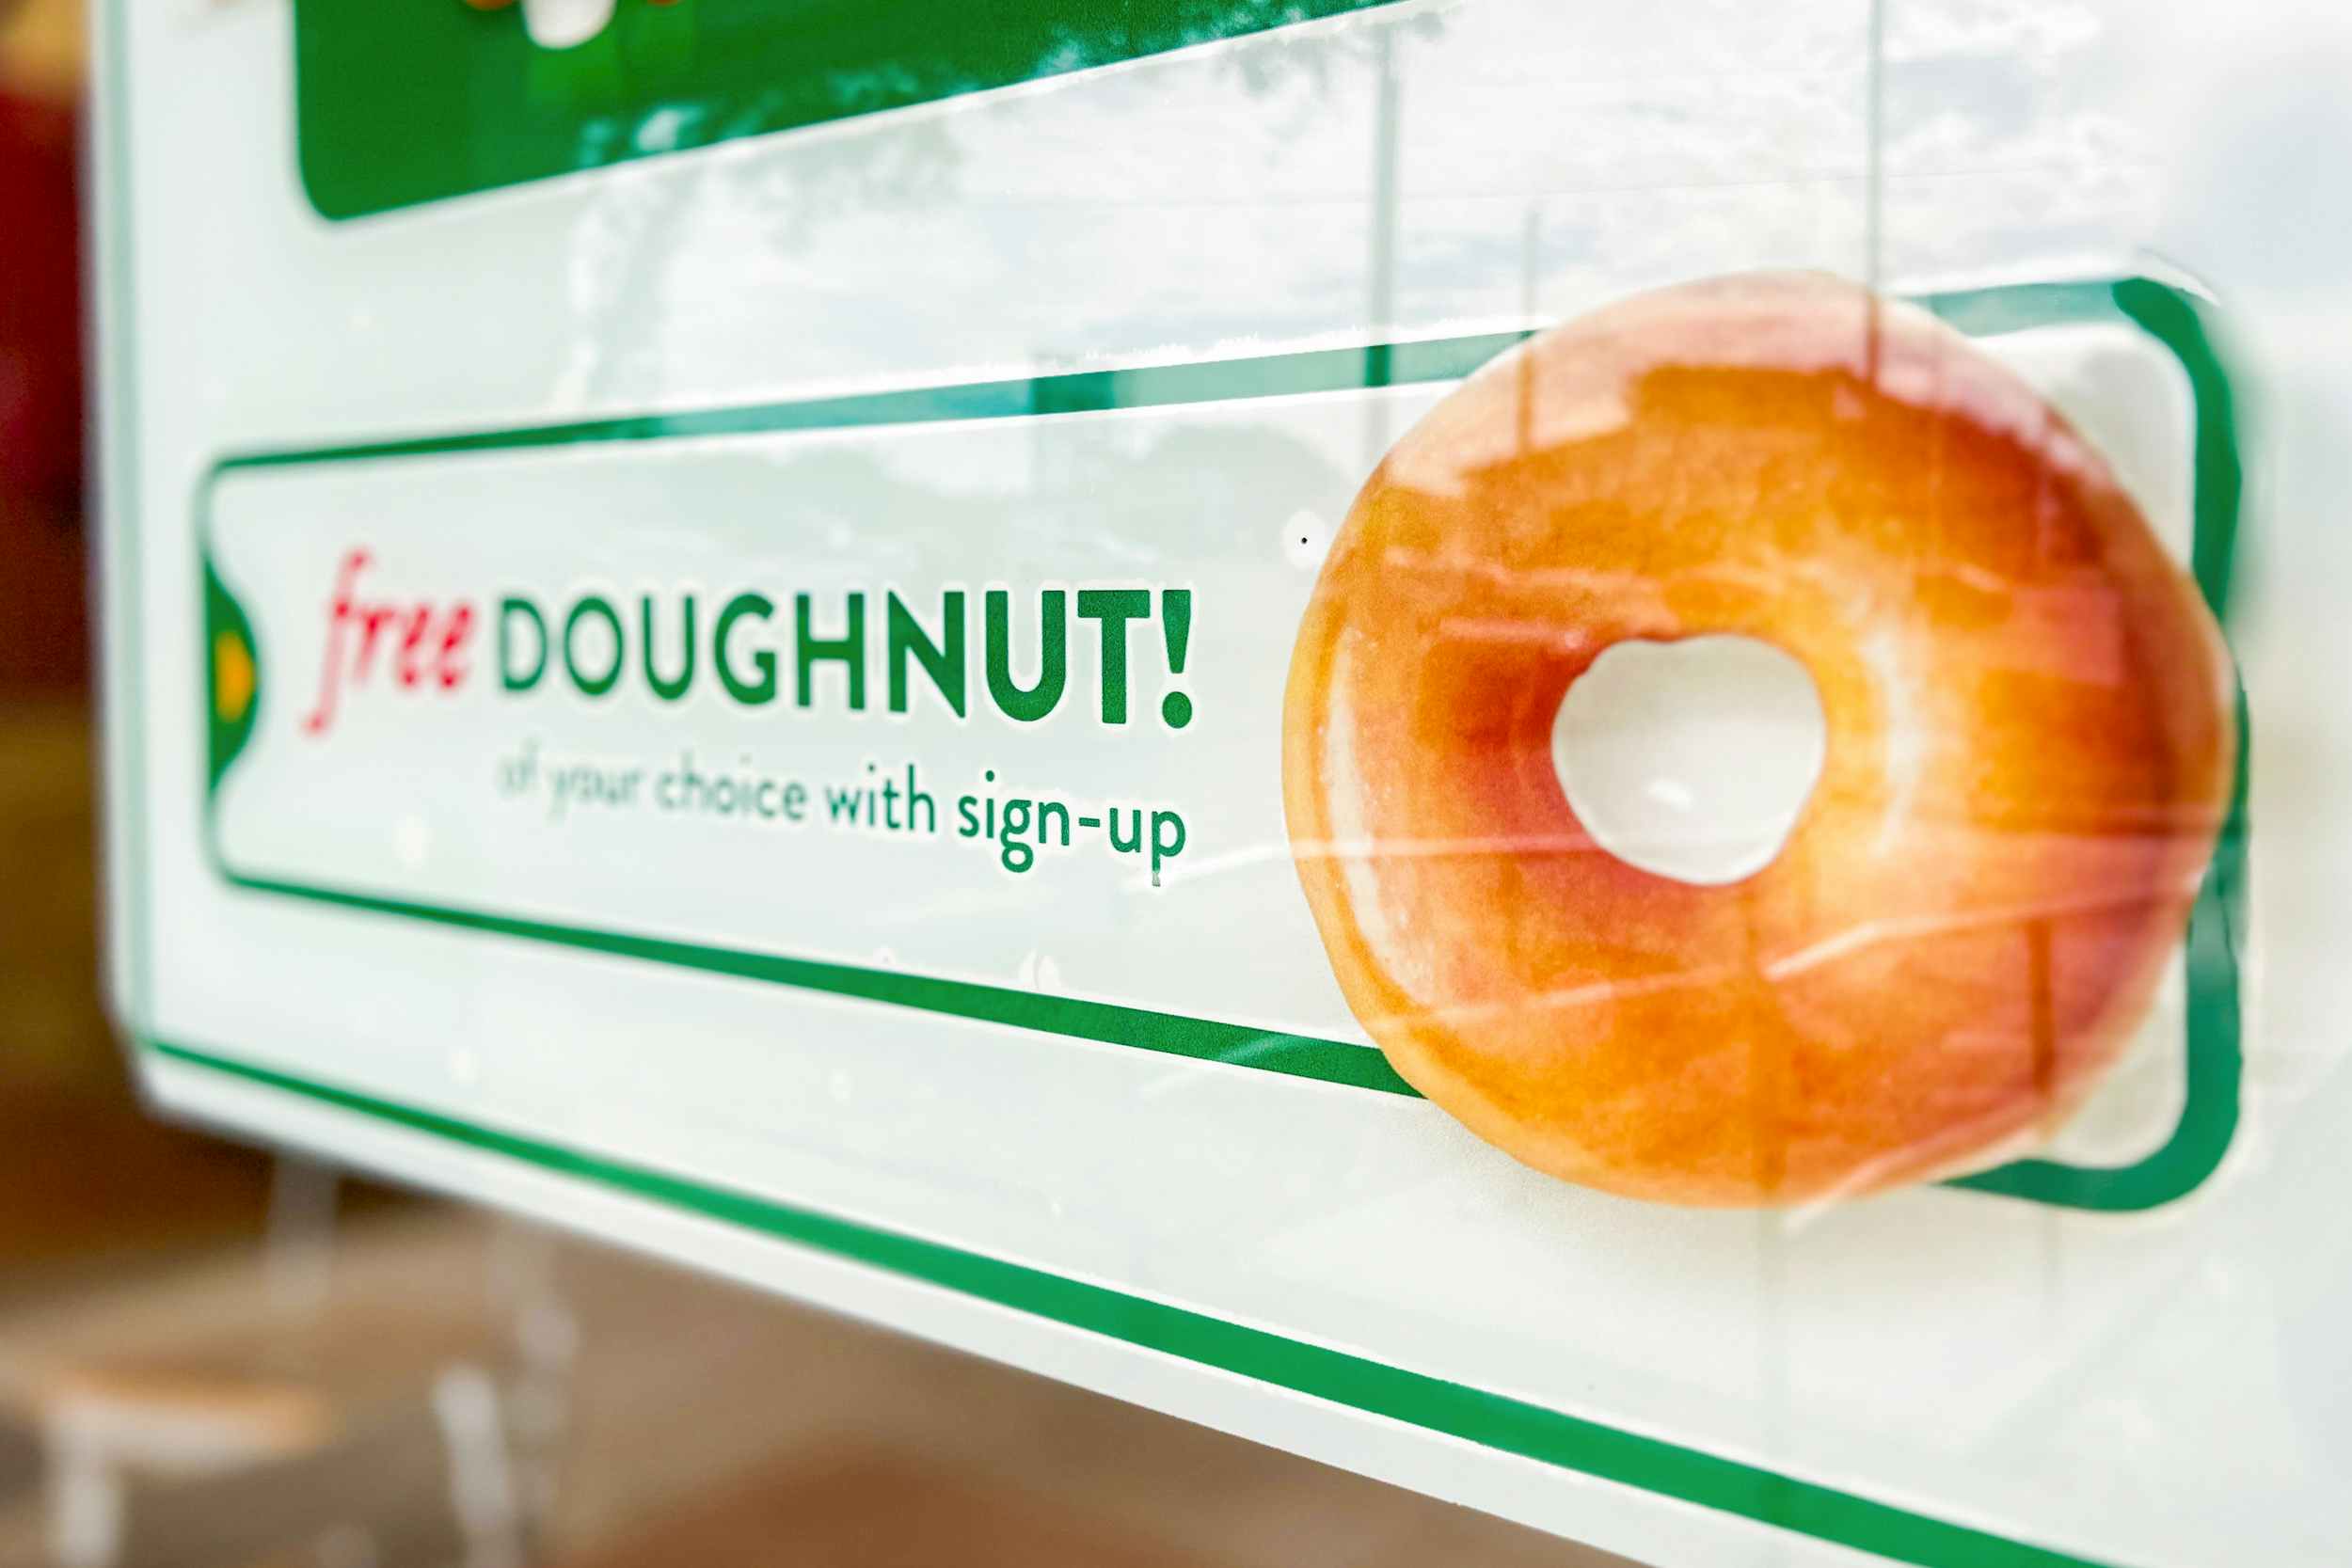 a sign for a free donut at Krispy Kreme